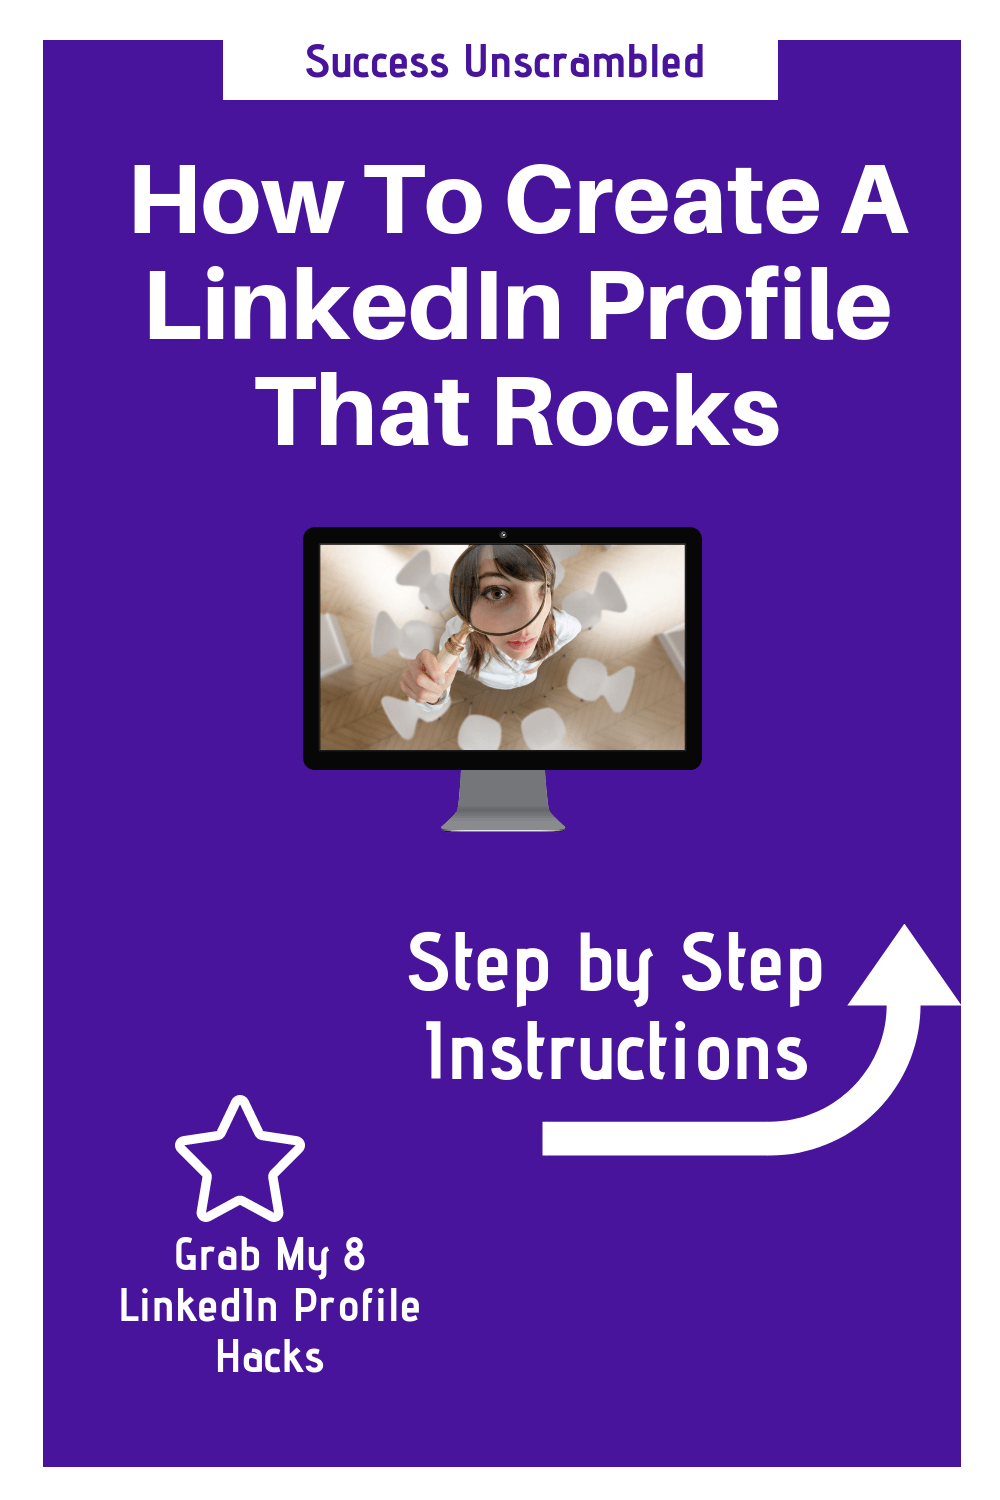 LinkedIn Profile 1000x1500 - 1